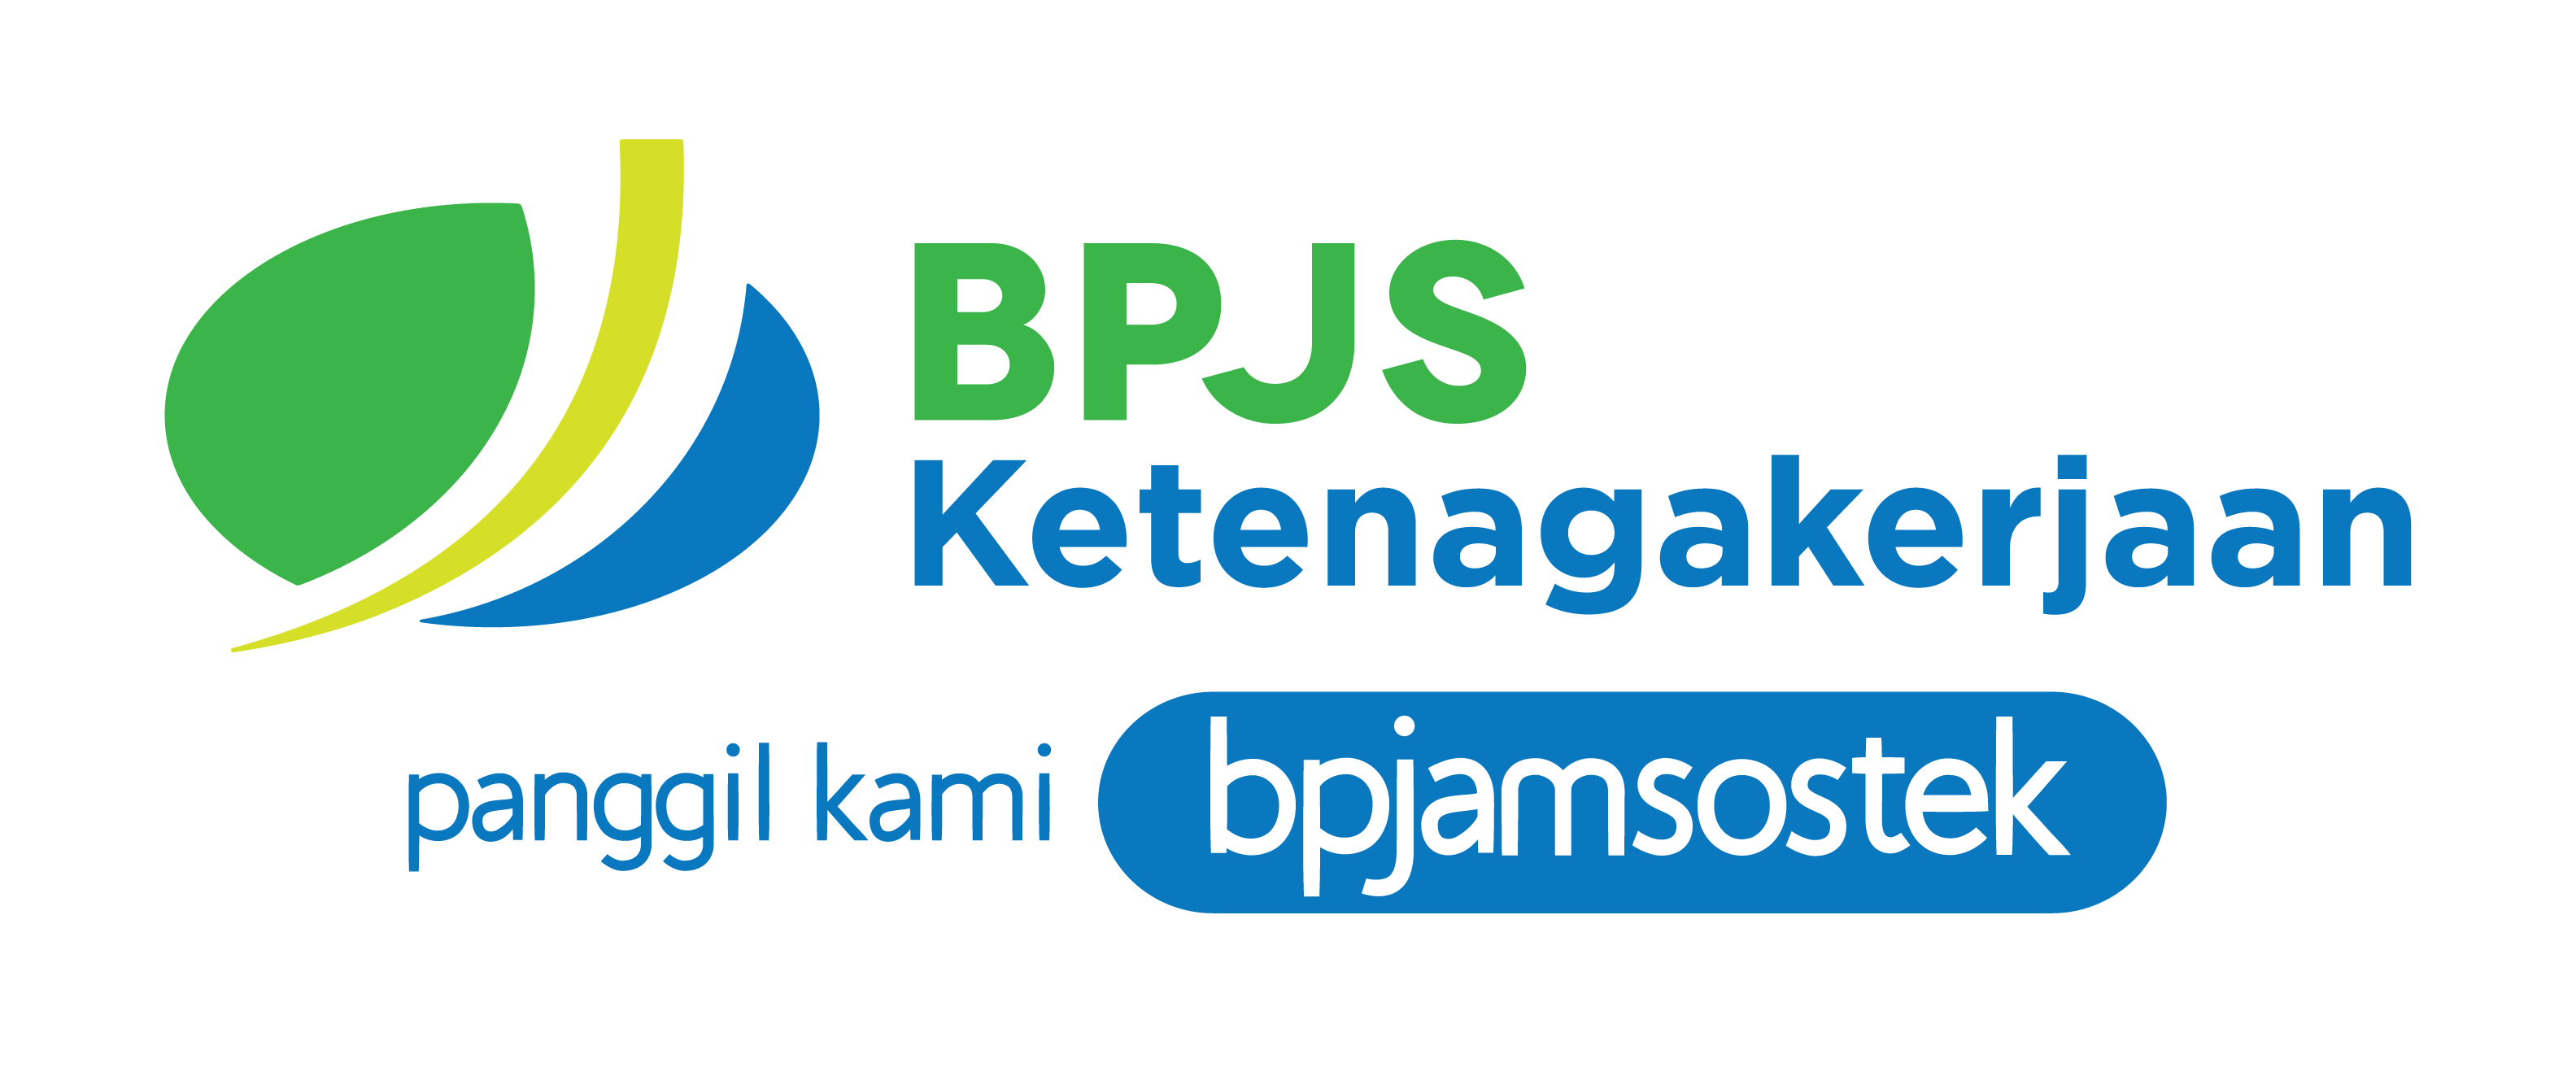 WARNA Logo BPJS Ketenagakerjaan - bpjamsostek (1)